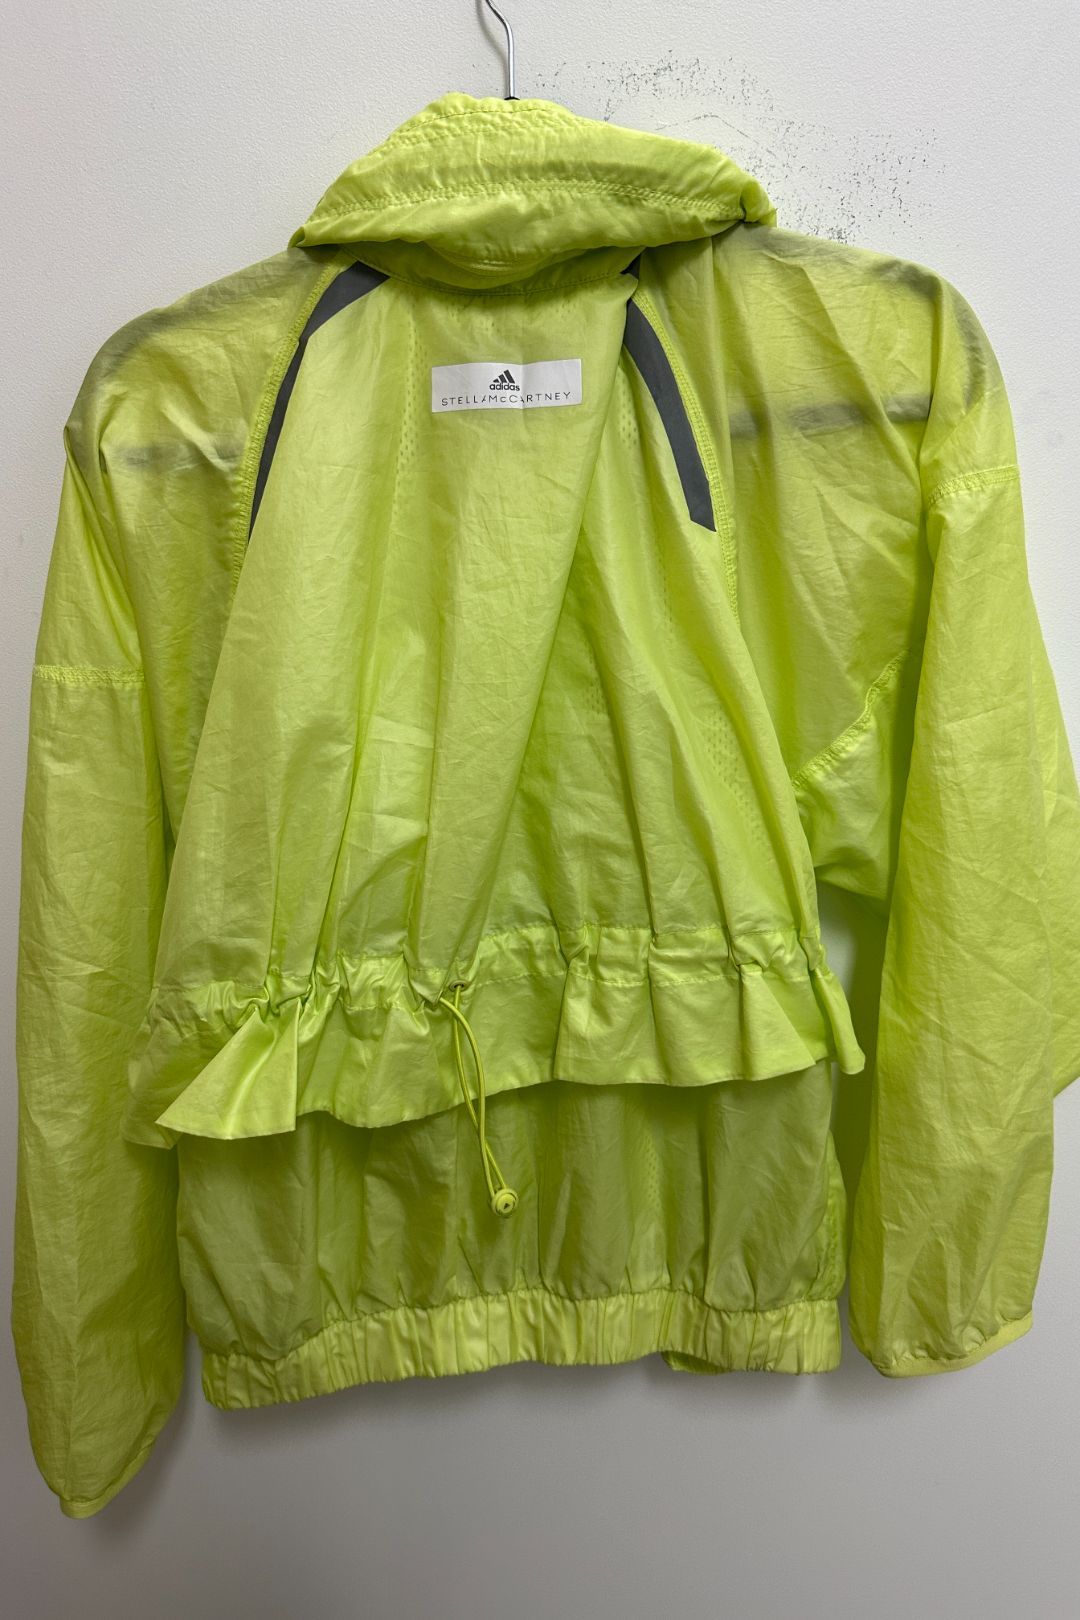 Adidas By Stella McCartney Neon Green Running Sports Jacket